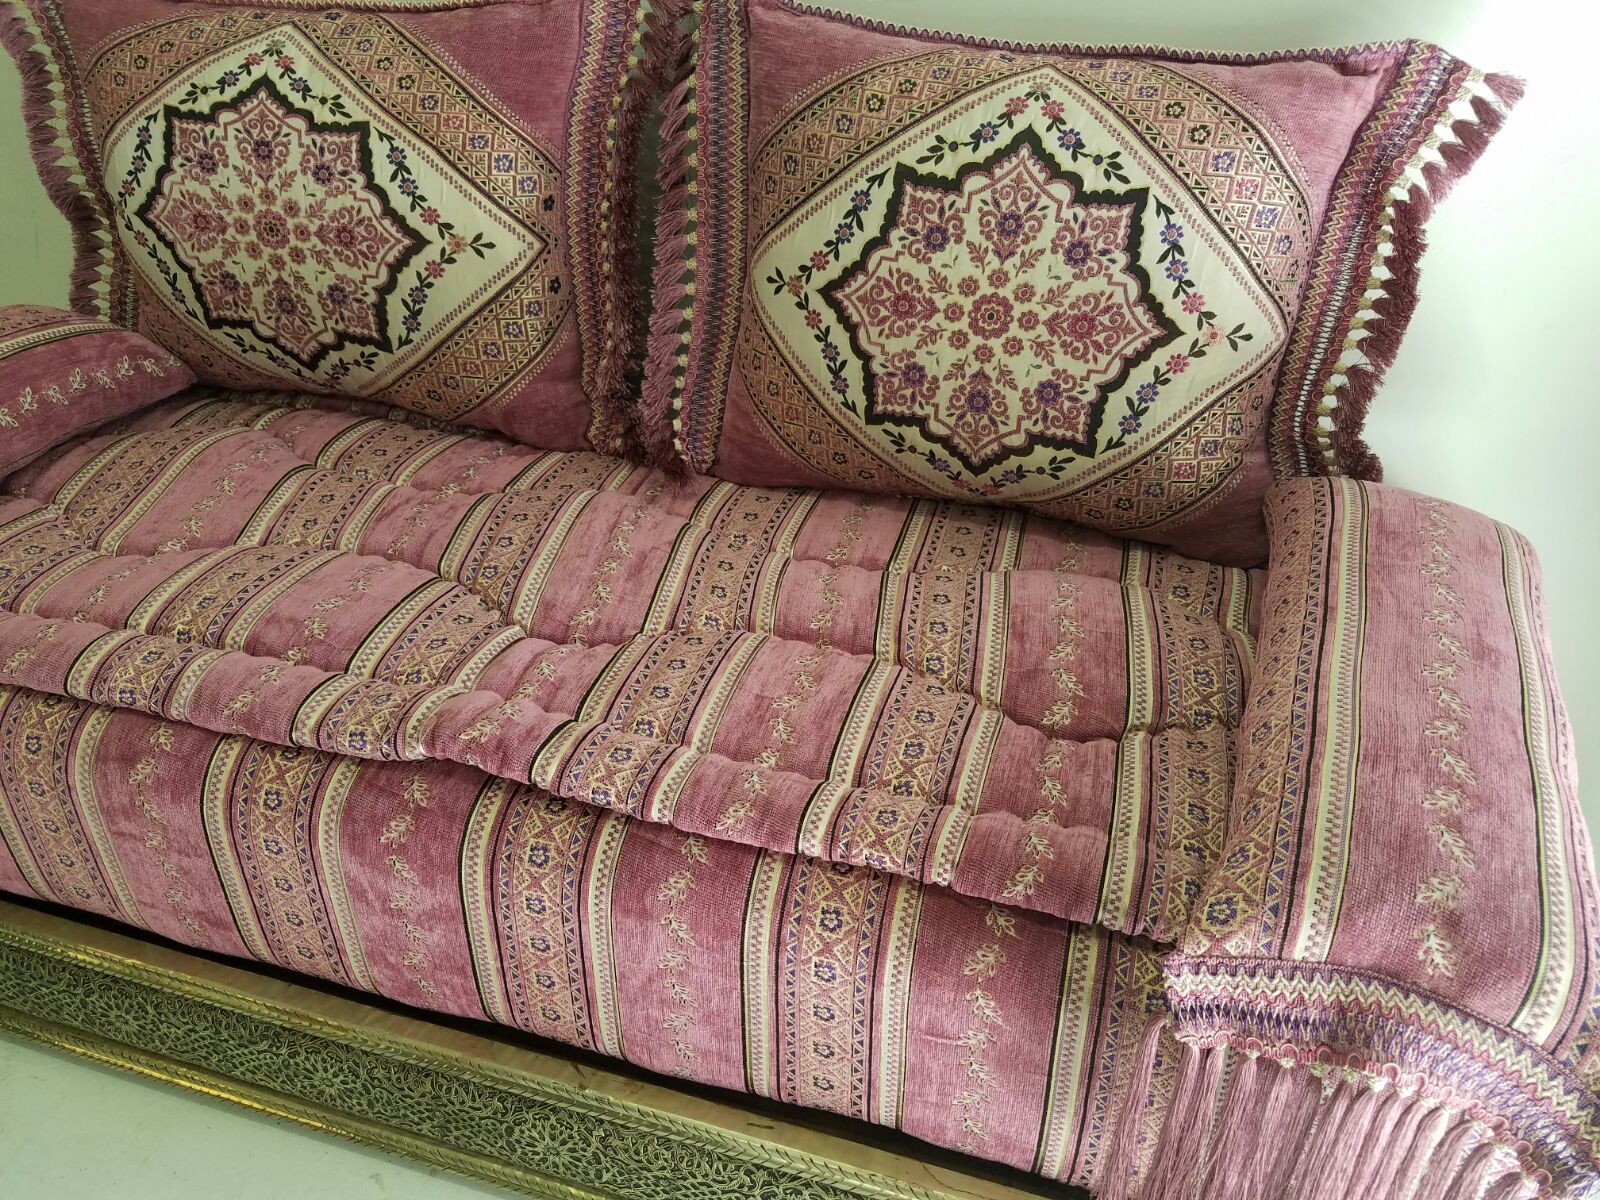 Farasha sofa